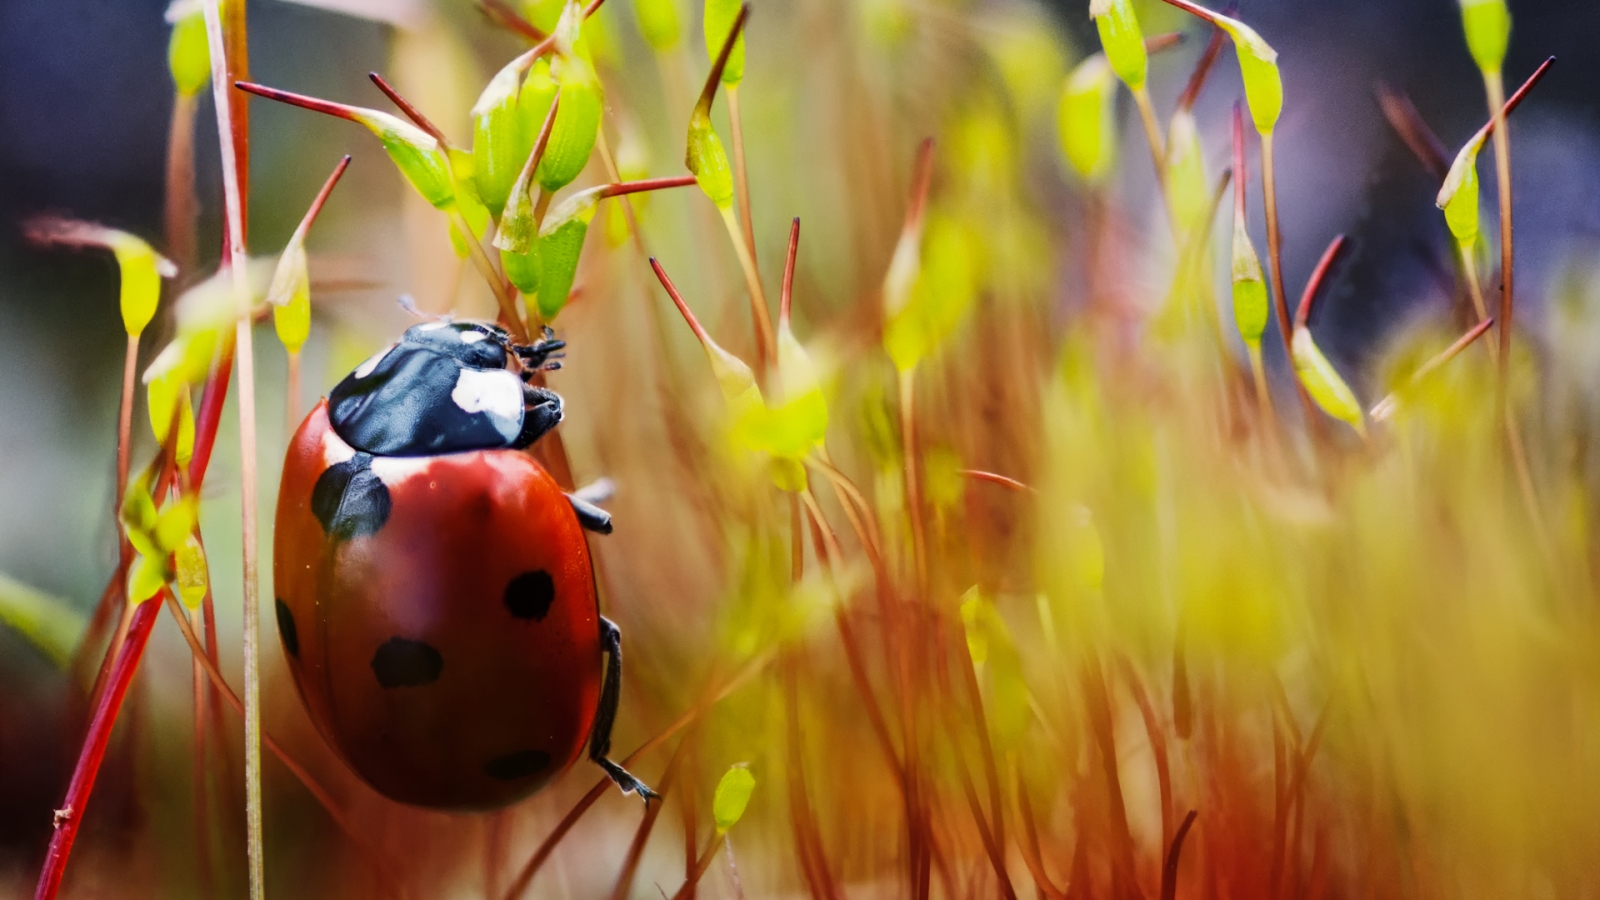 Red Ladybug Macro Photo for 1600 x 900 HDTV resolution